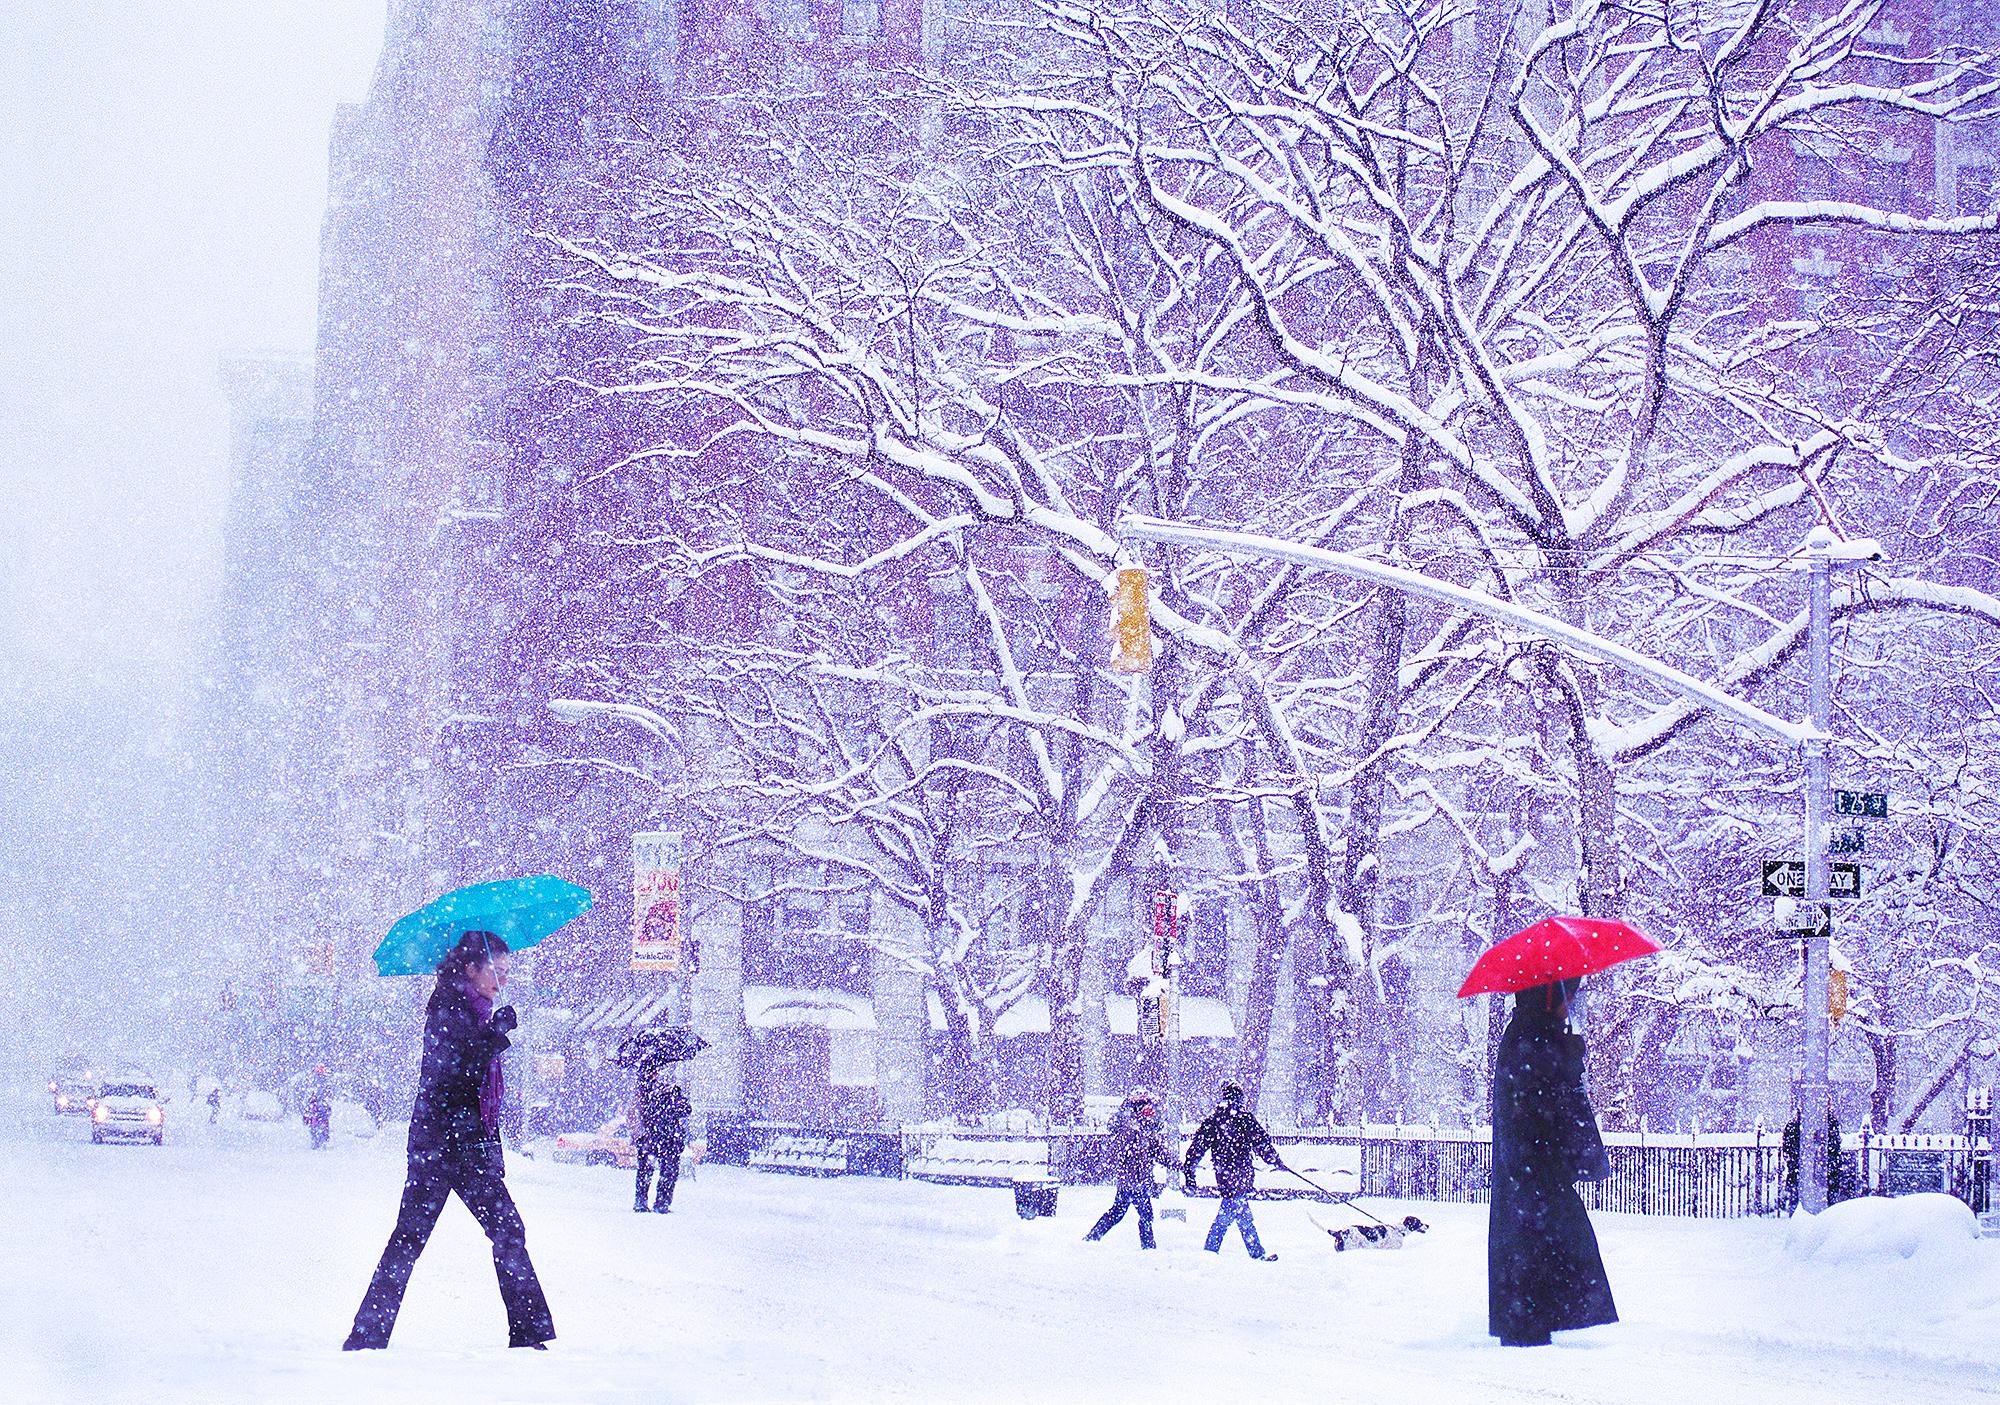 Two Umbrellas in New York Snowstorm